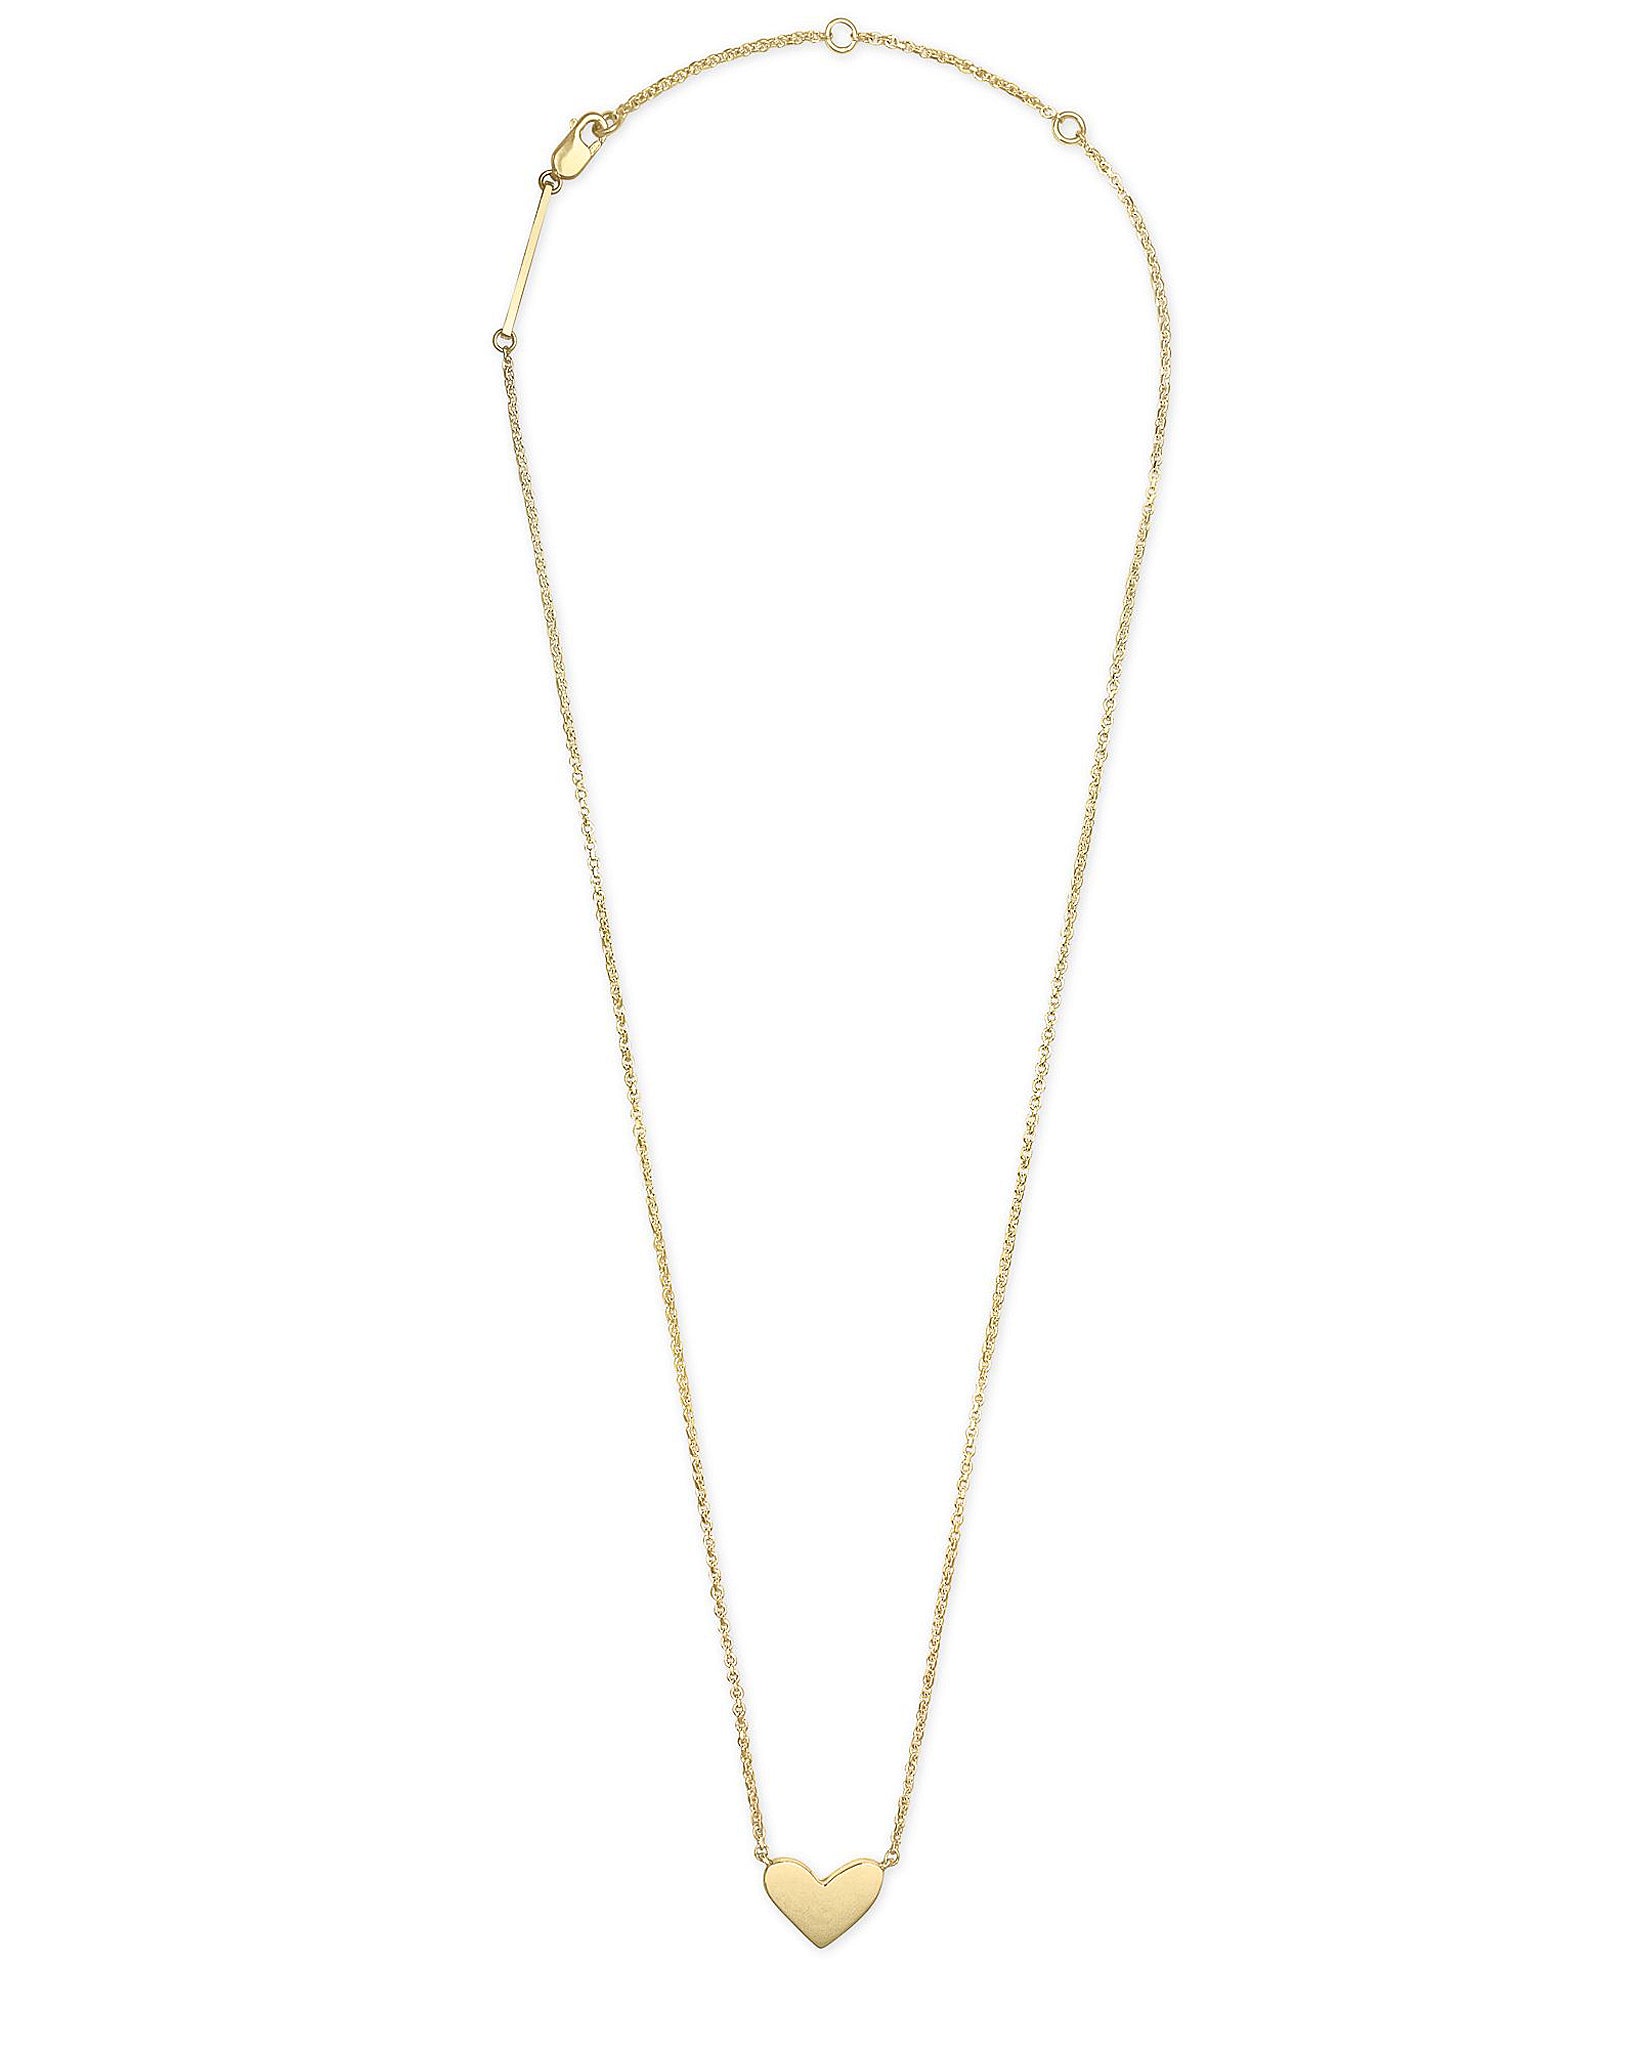 Kendra Scott Ari Heart Pendant Necklace in 18k Gold Vermeil